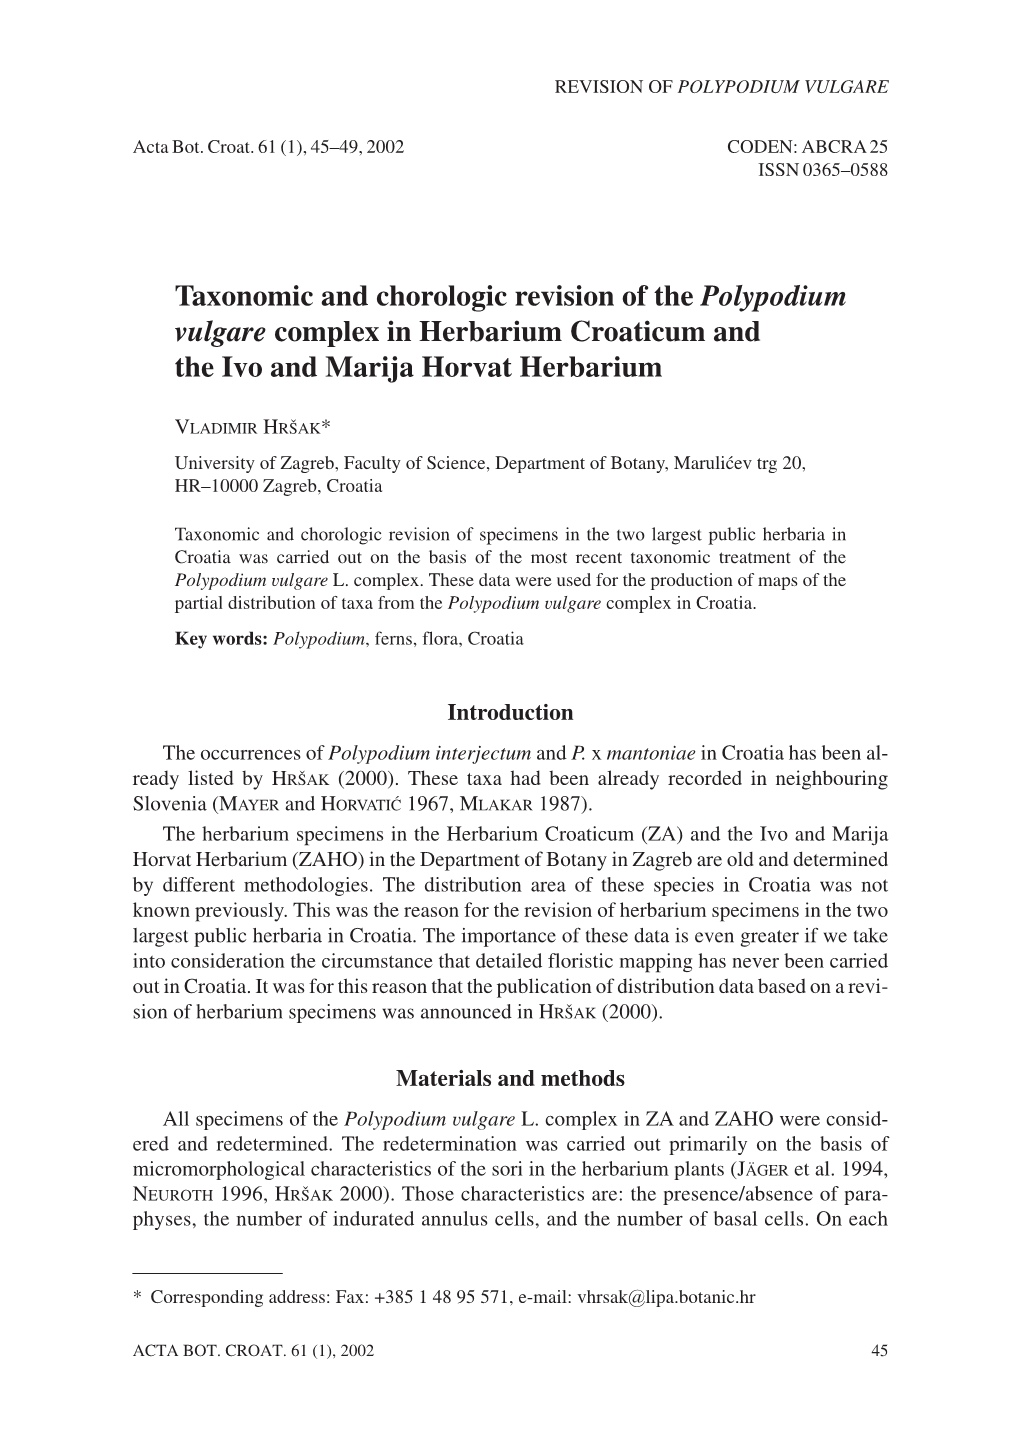 Taxonomic and Chorologic Revision of the Polypodium Vulgare Complex in Herbarium Croaticum and the Ivo and Marija Horvat Herbarium